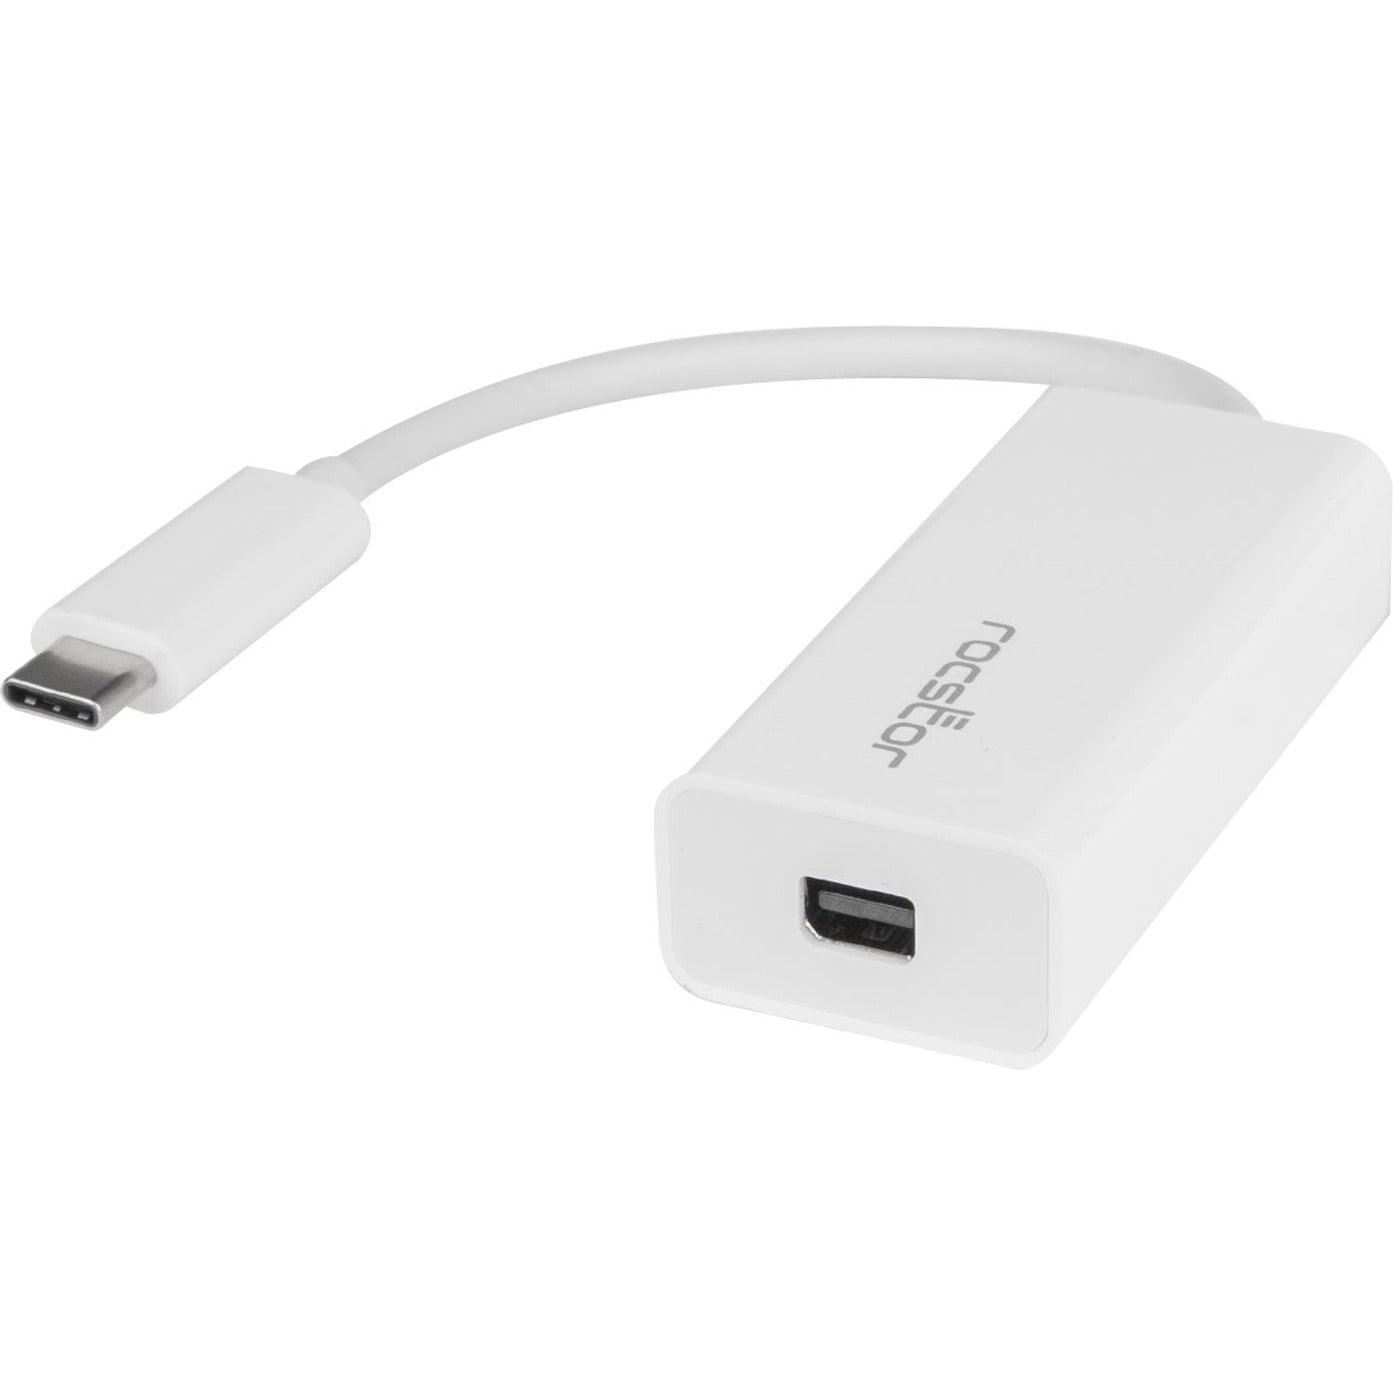 Rocstor Y10A241-W1 USB C to Mini DisplayPort Adapter - 4K 60Hz, White